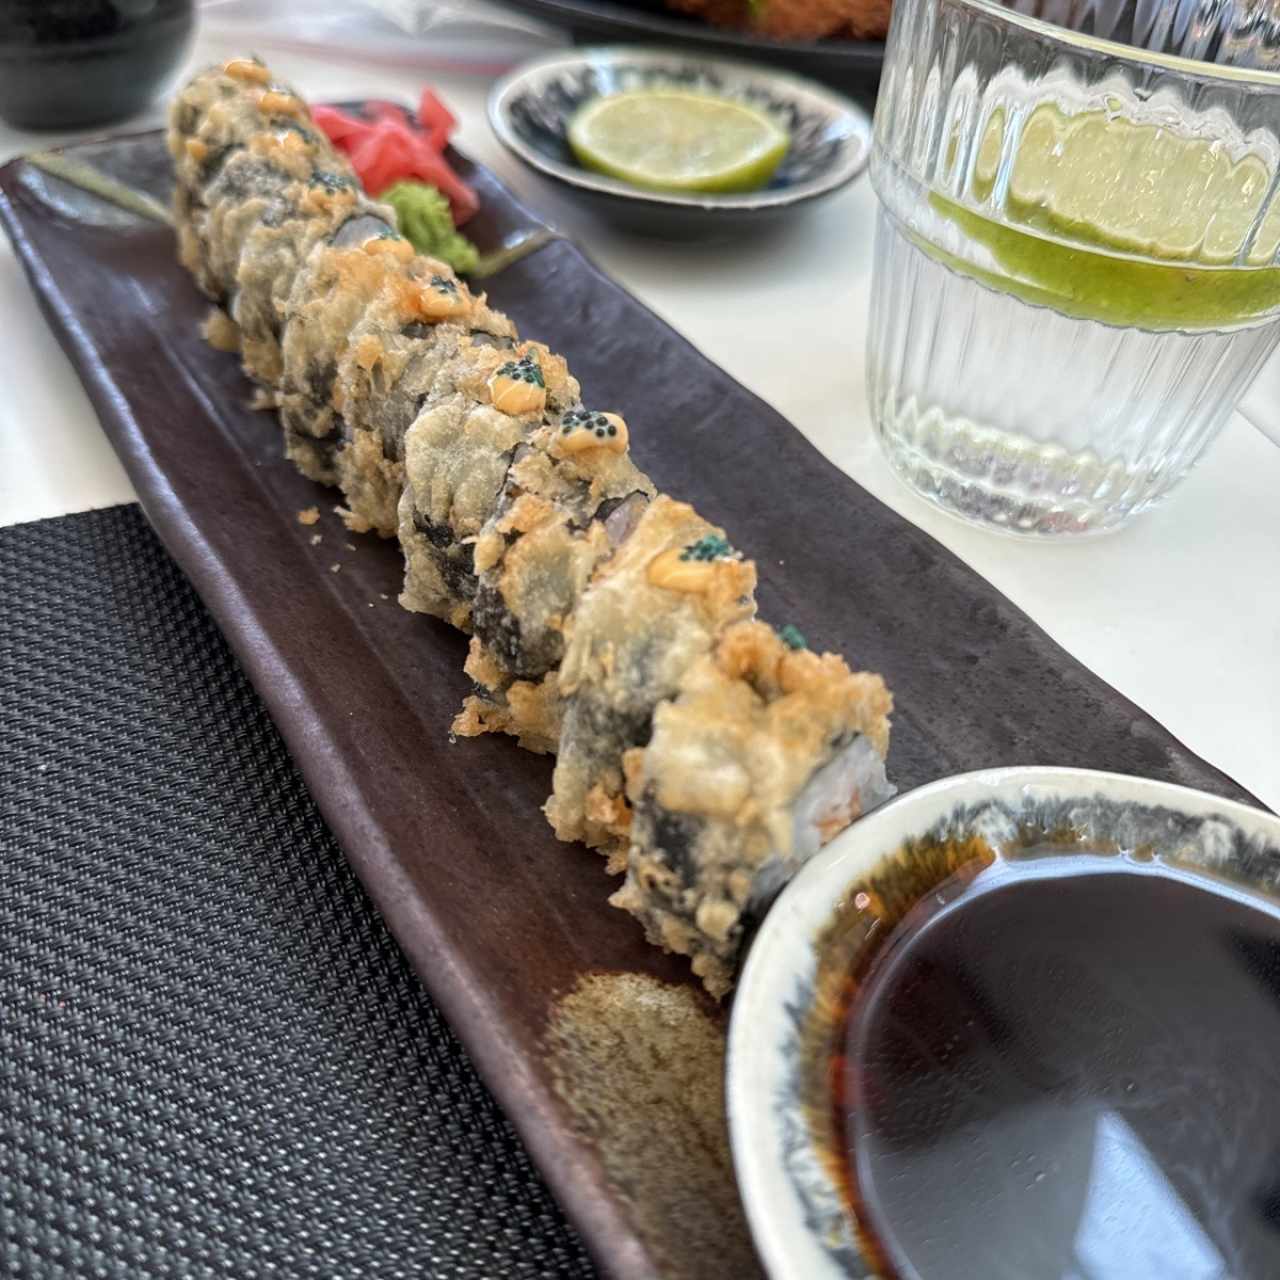 Sushi Roll - El Tempura (Tempurizado)